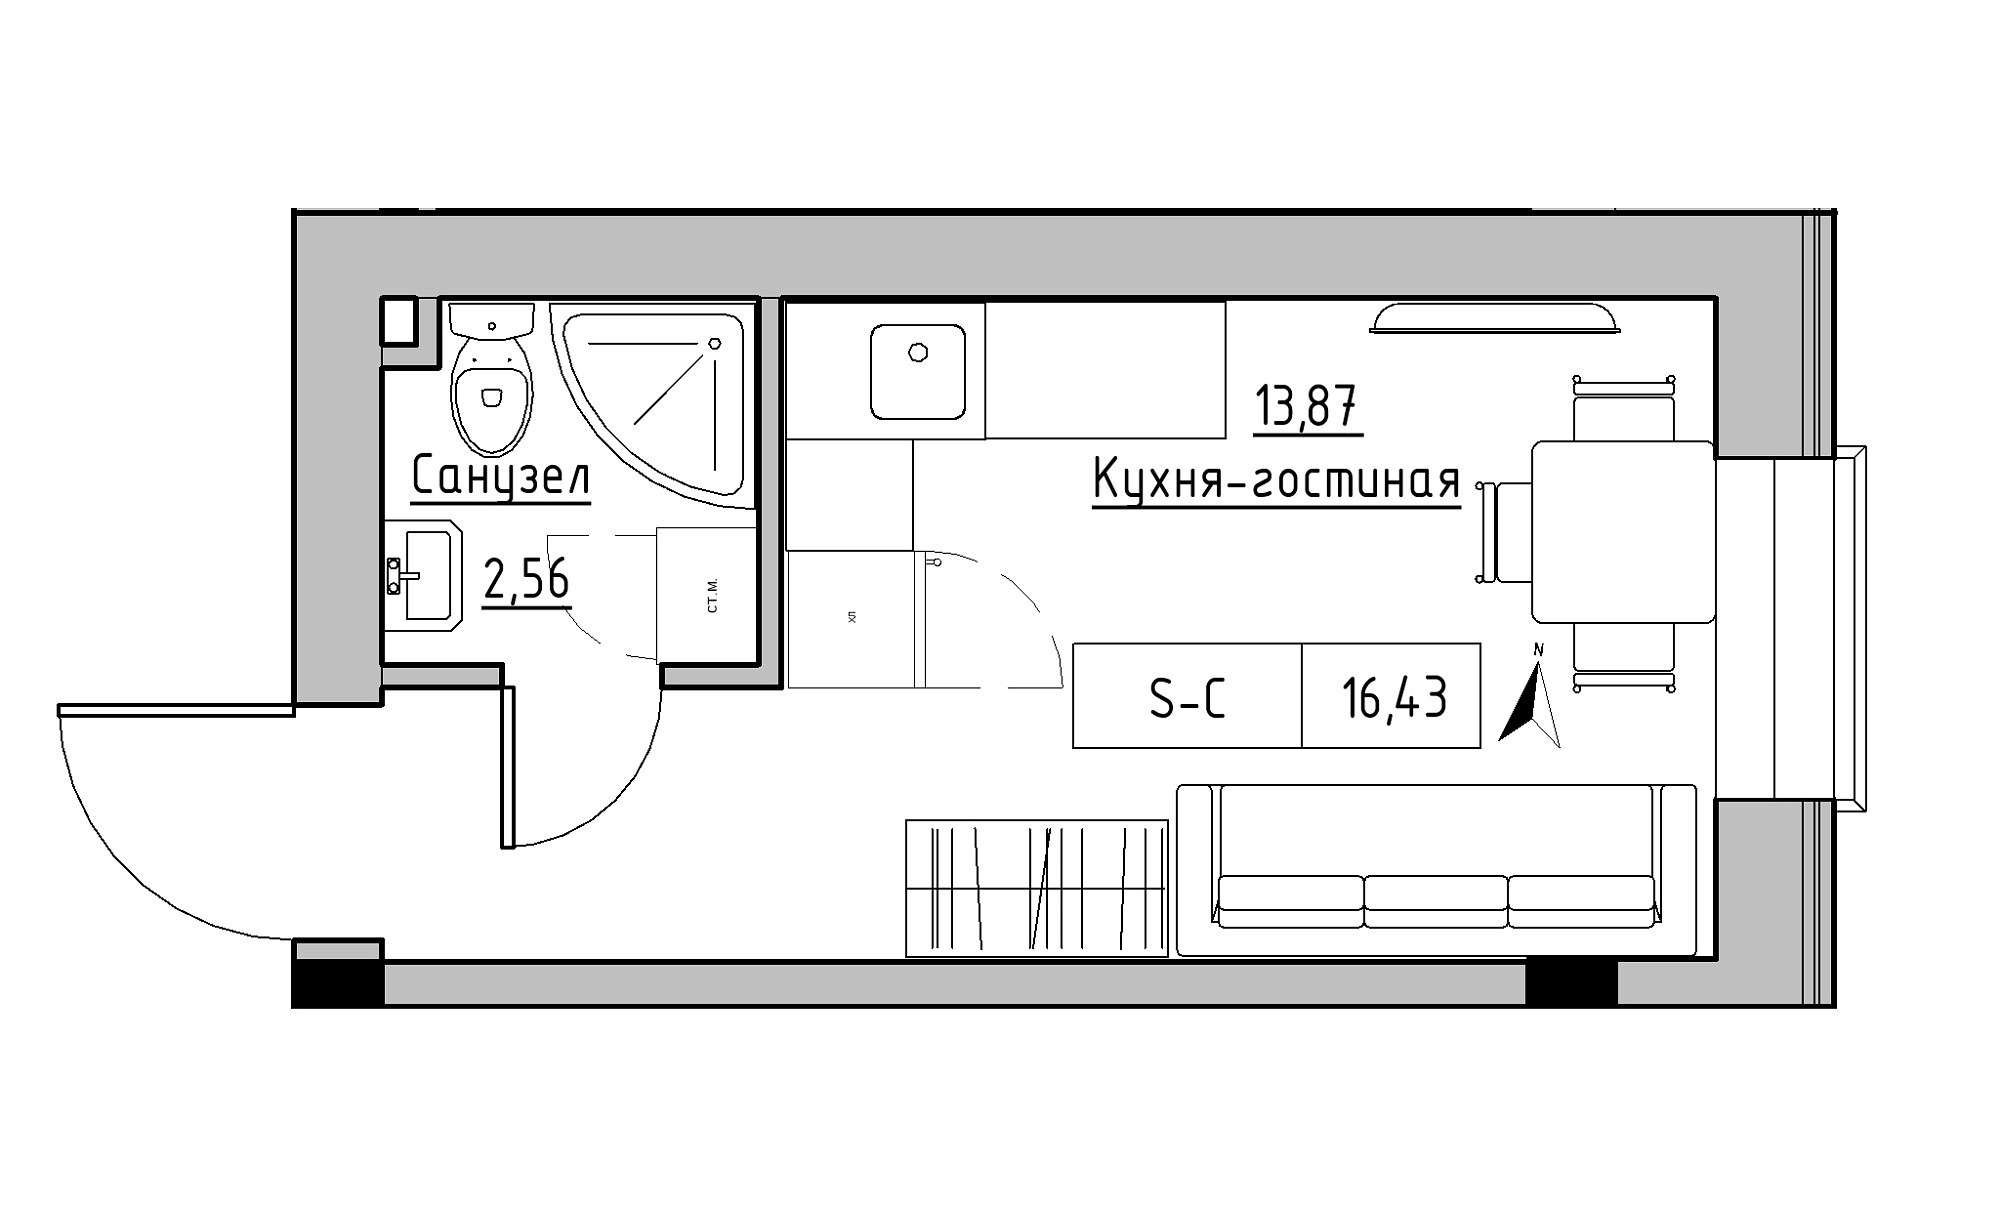 Planning Smart flats area 16.43m2, KS-023-05/0005.